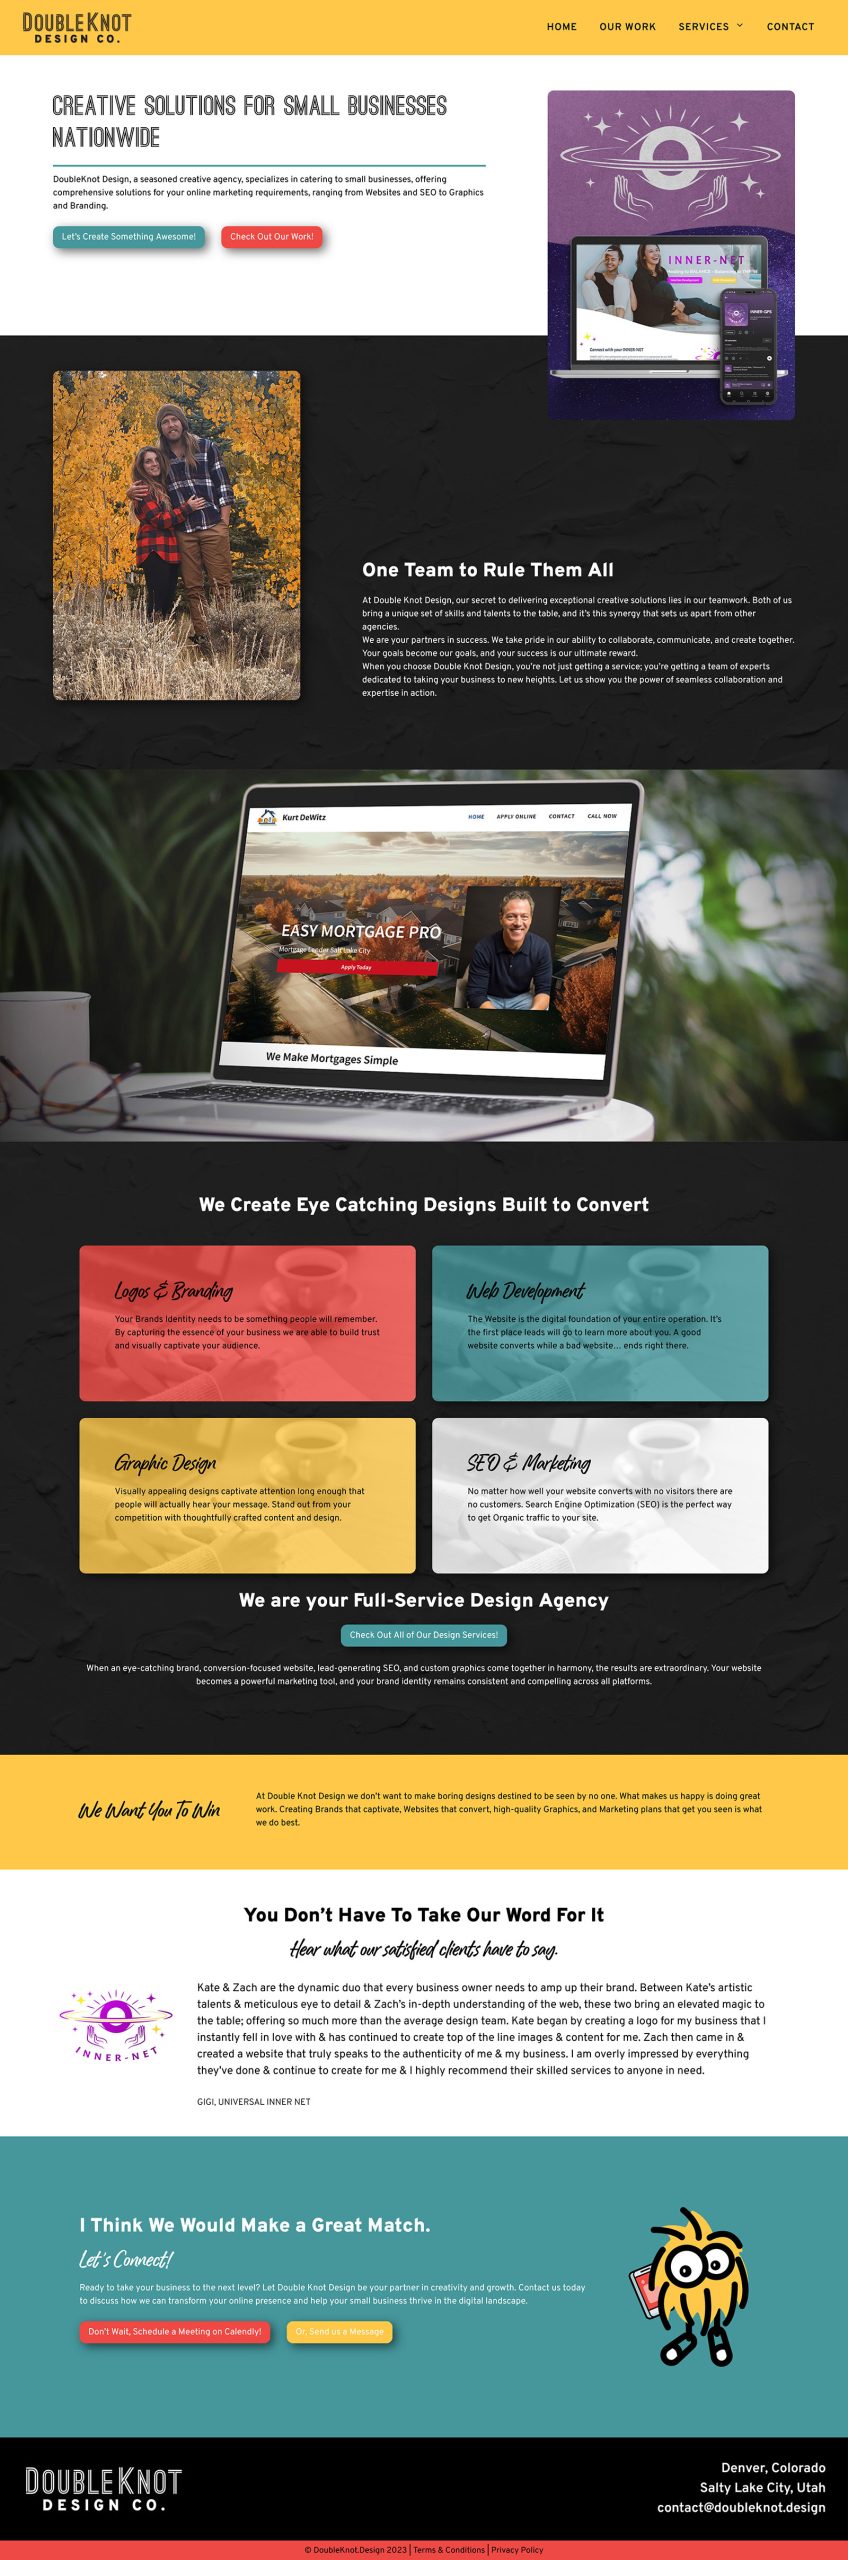 double knot web design website homepage screenshot graphic design salt lake city utah